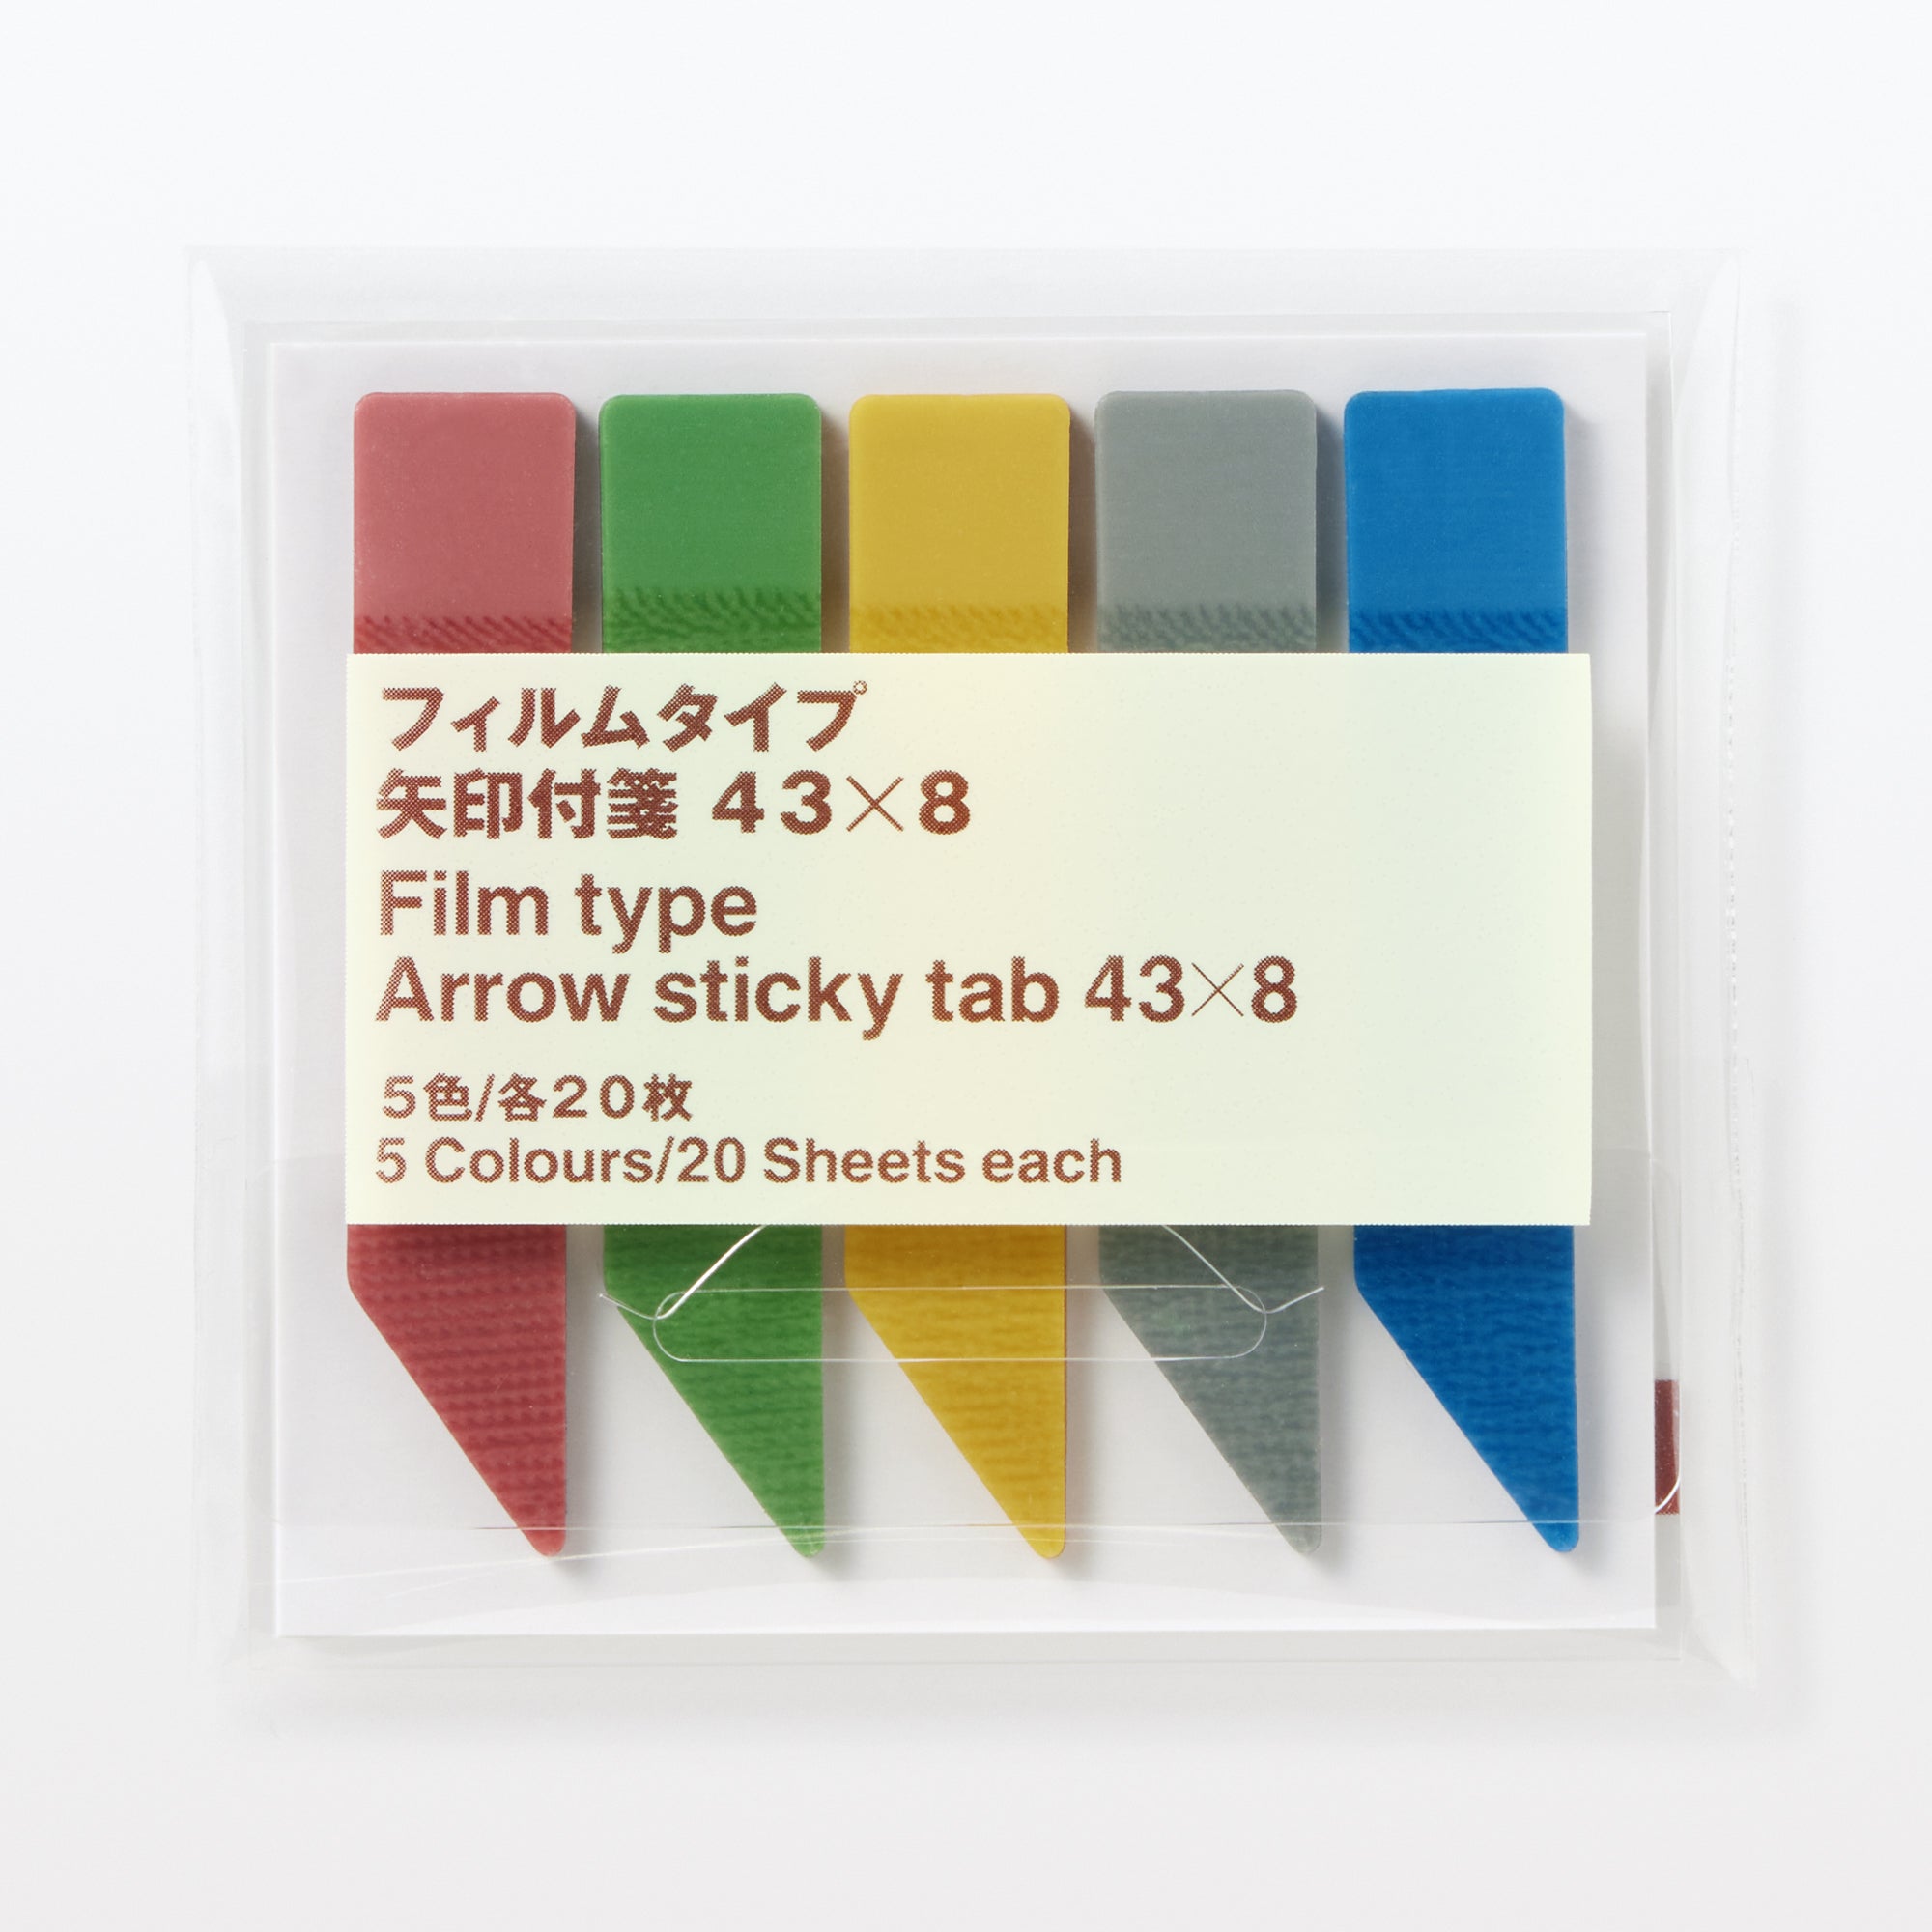 Arrow Sticky Tab Film Type 5 Colour Set 43 x 8 mm